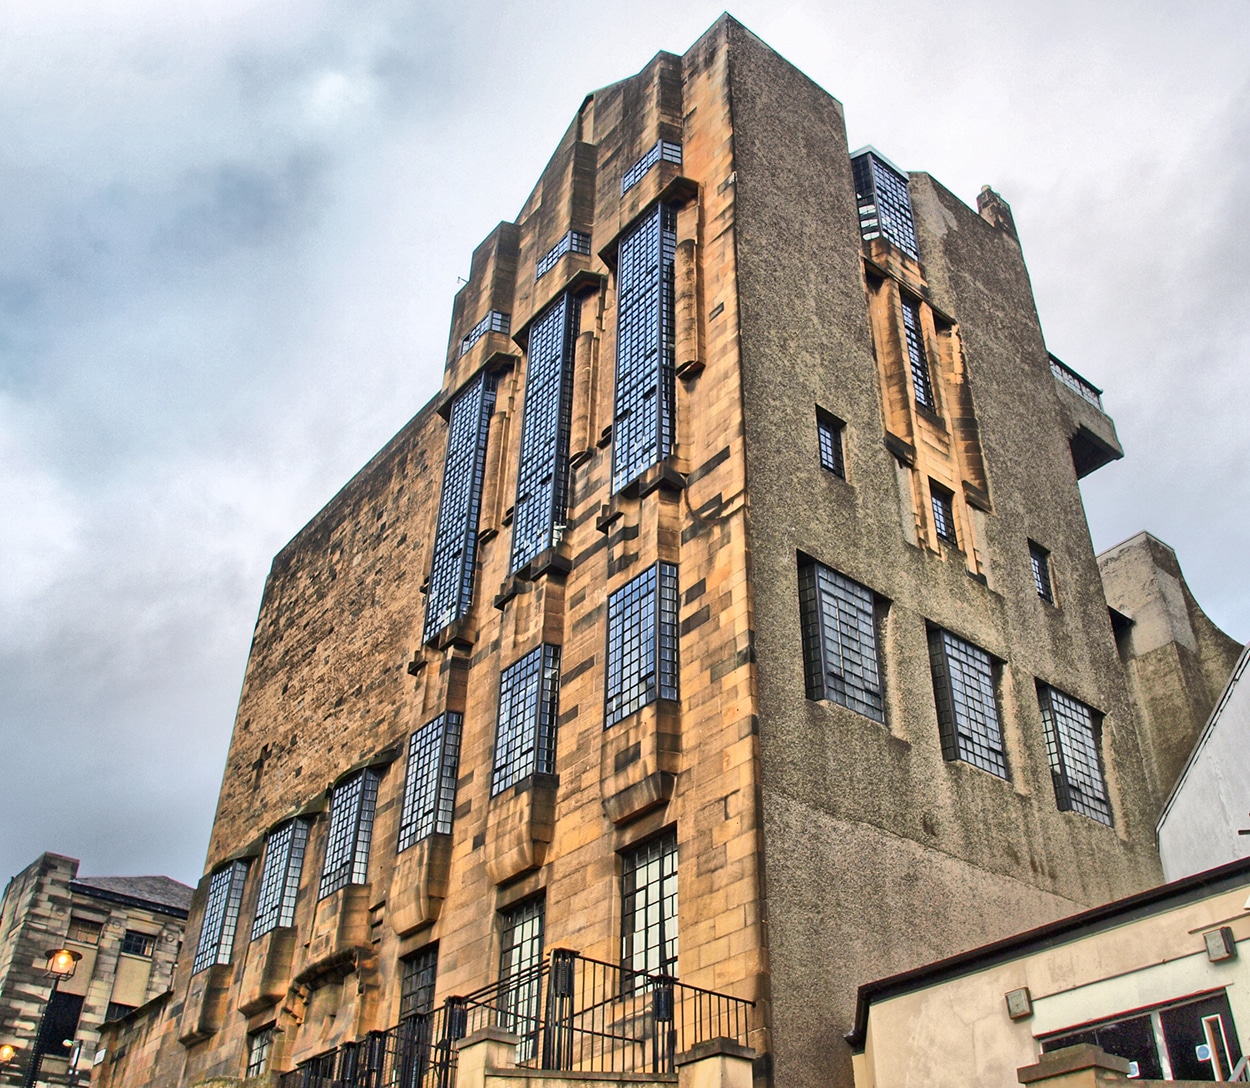 Glasgow School of Art in Glasgow Scotland